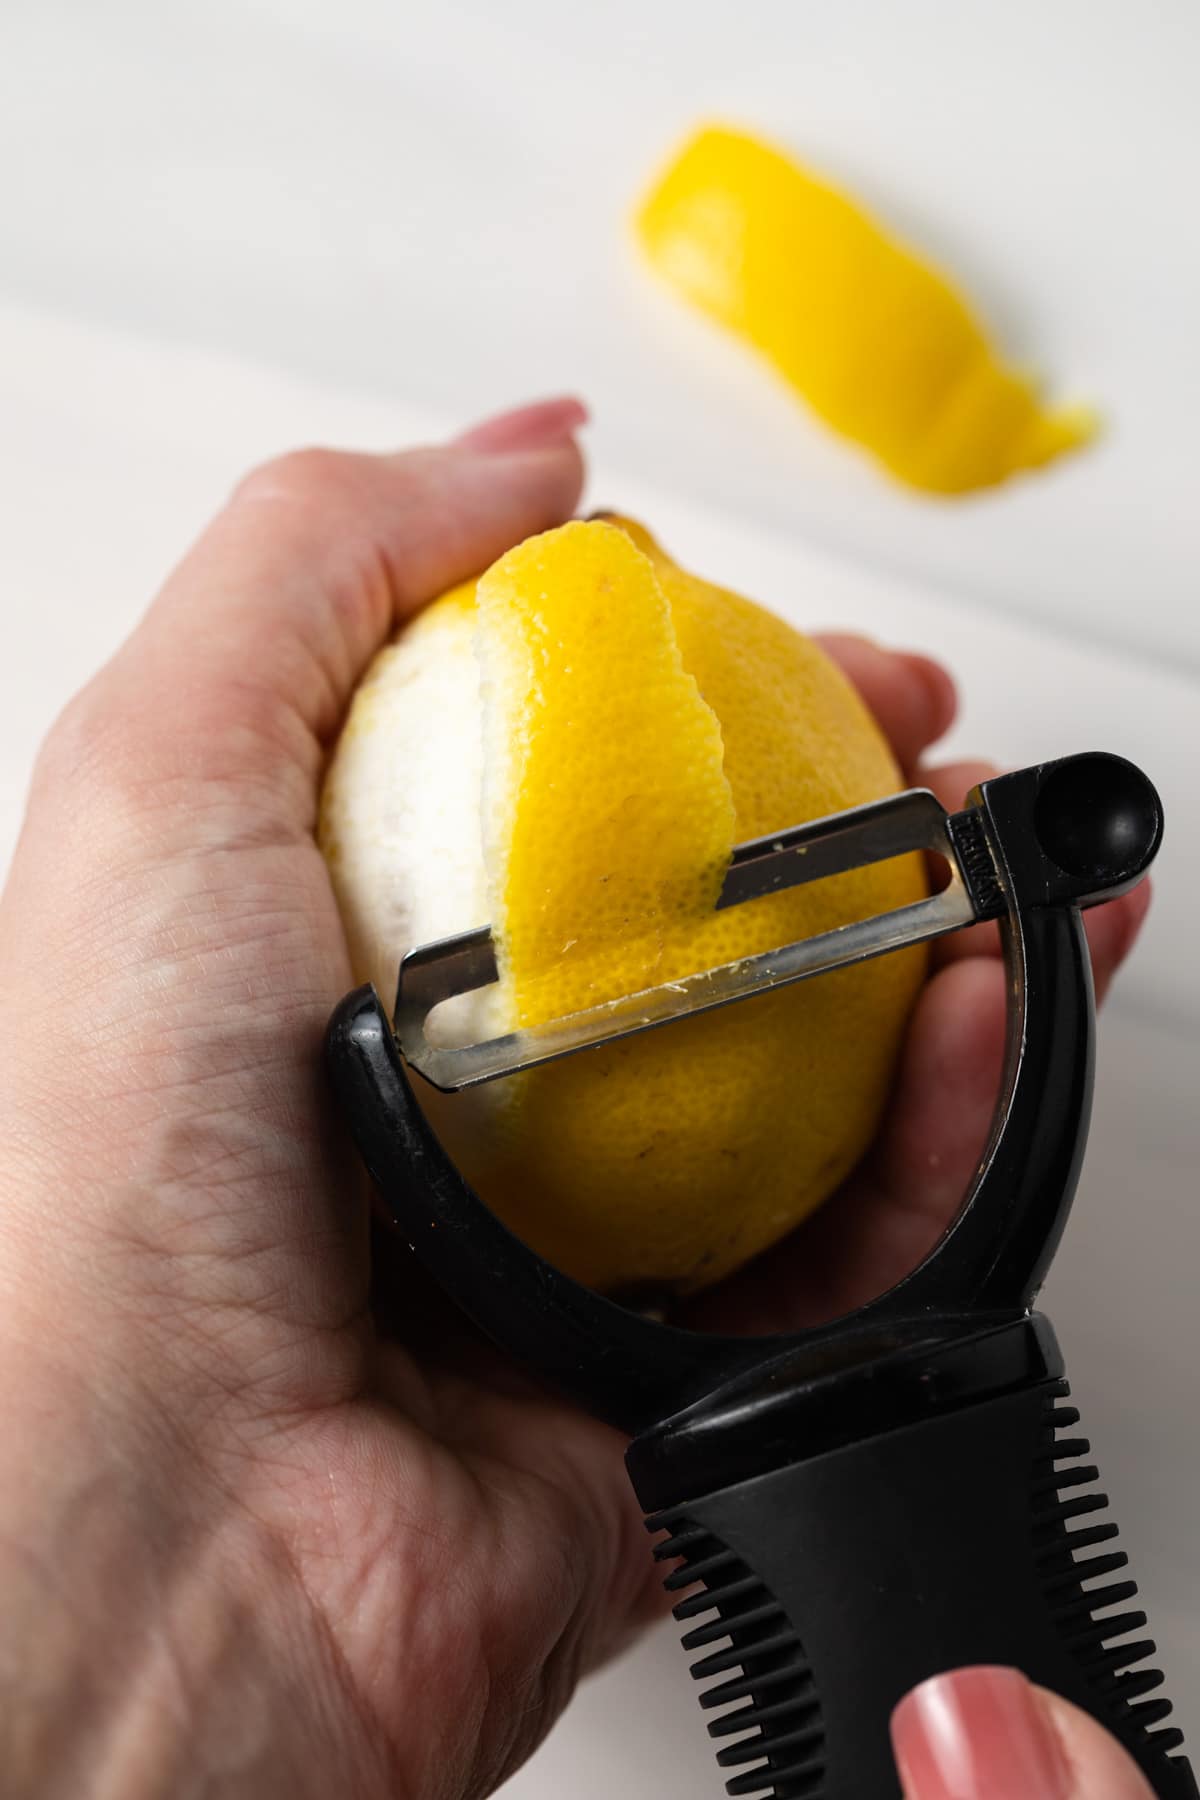 Zesting a lemon with a peeler.